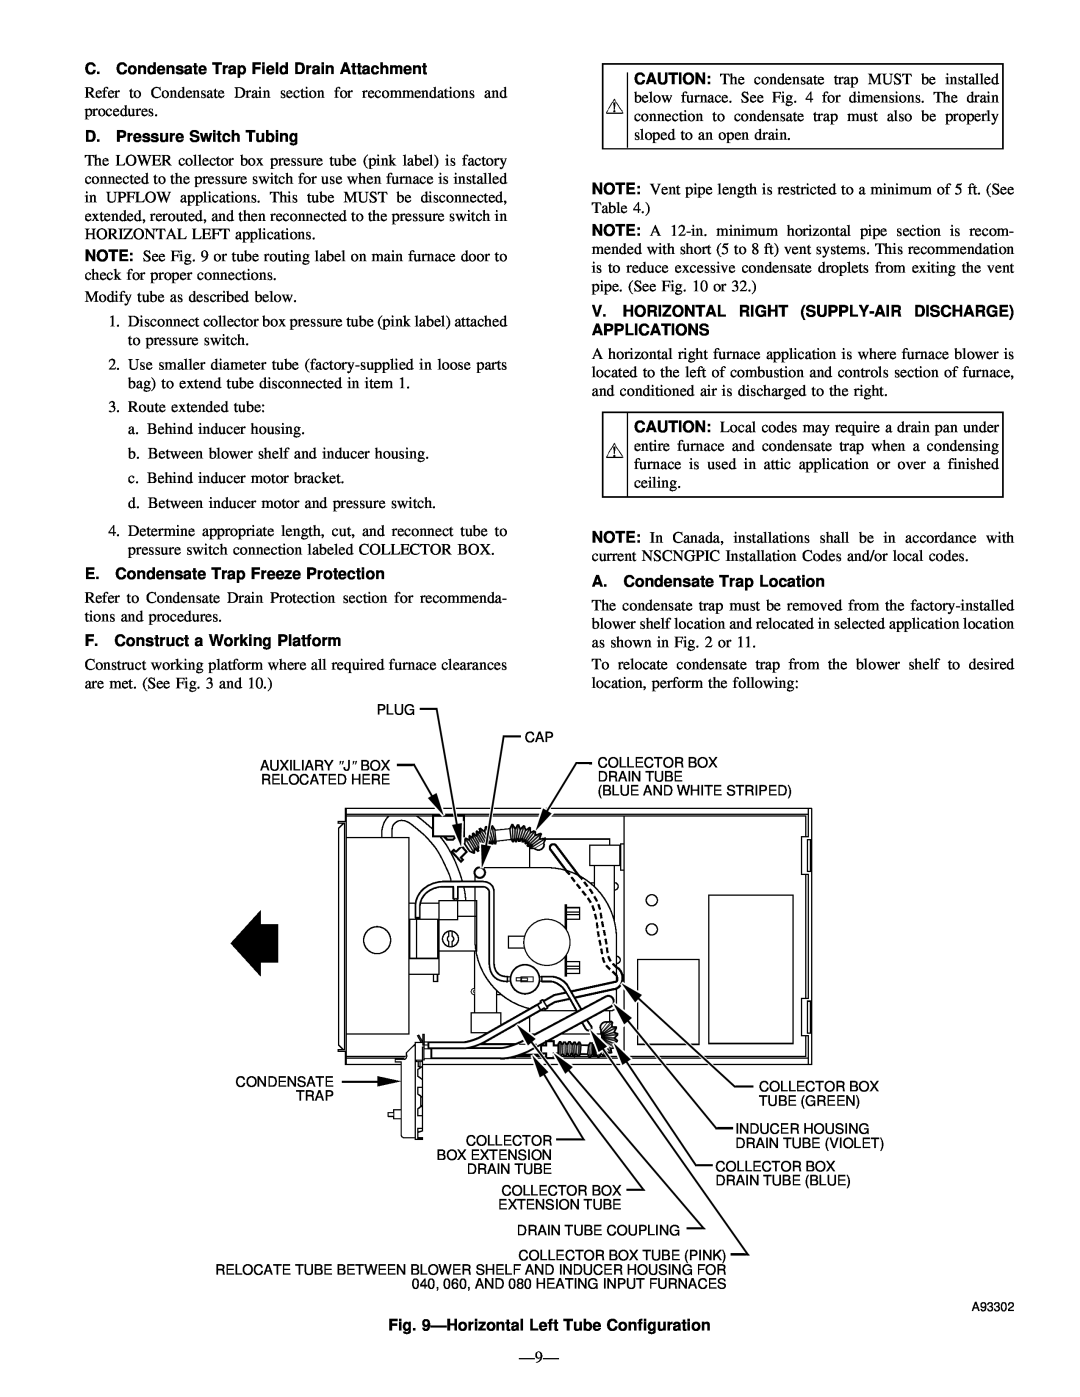 Bryant 345MAV E.Condensate Trap Freeze Protection, F.Construct a Working Platform, ÐHorizontal Left Tube Configuration 